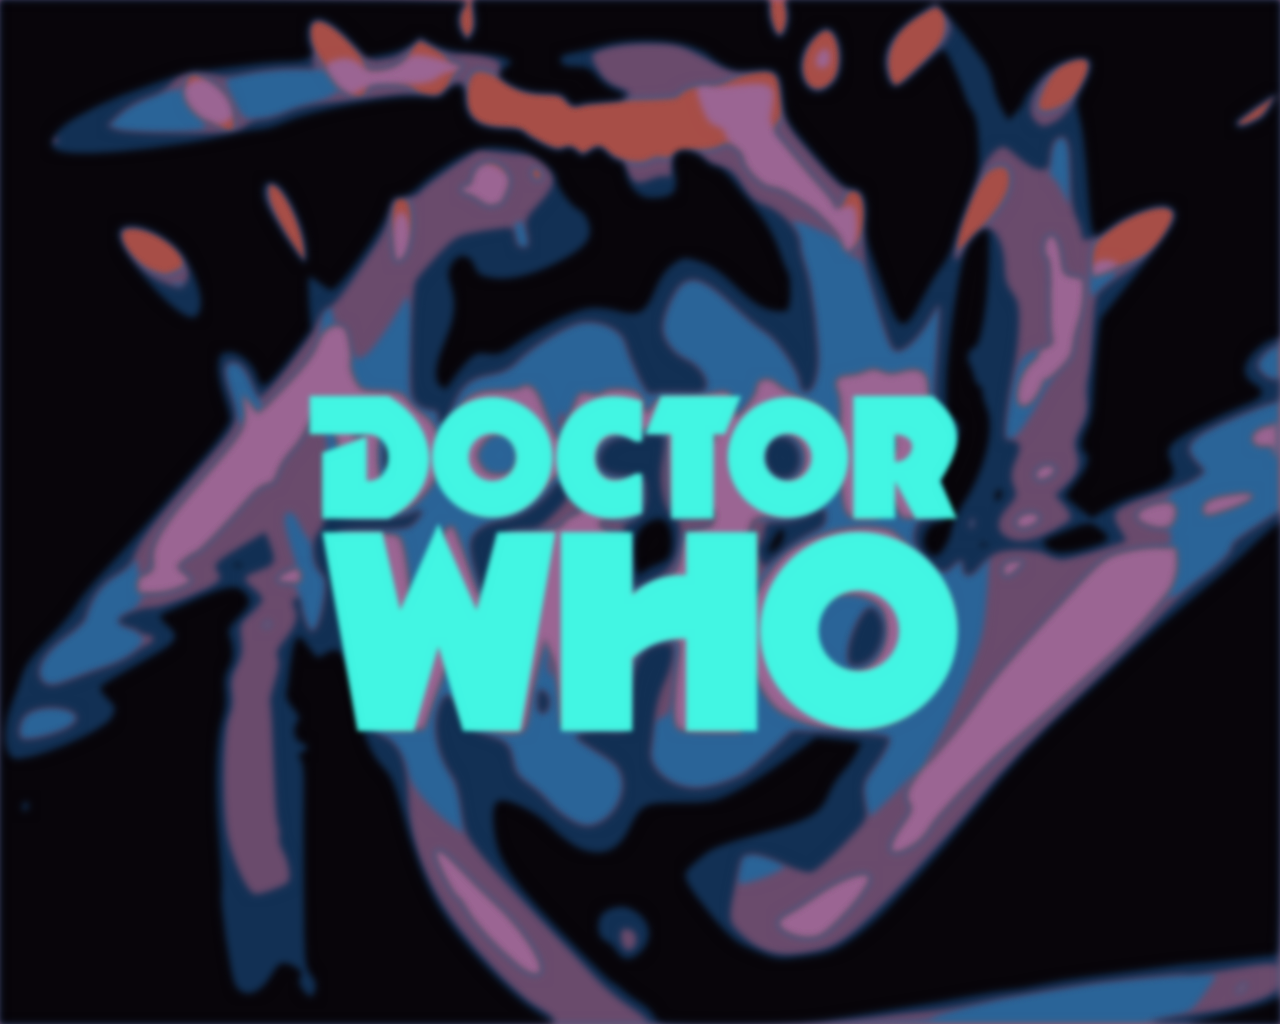 Doctor+who+logo+wallpaper